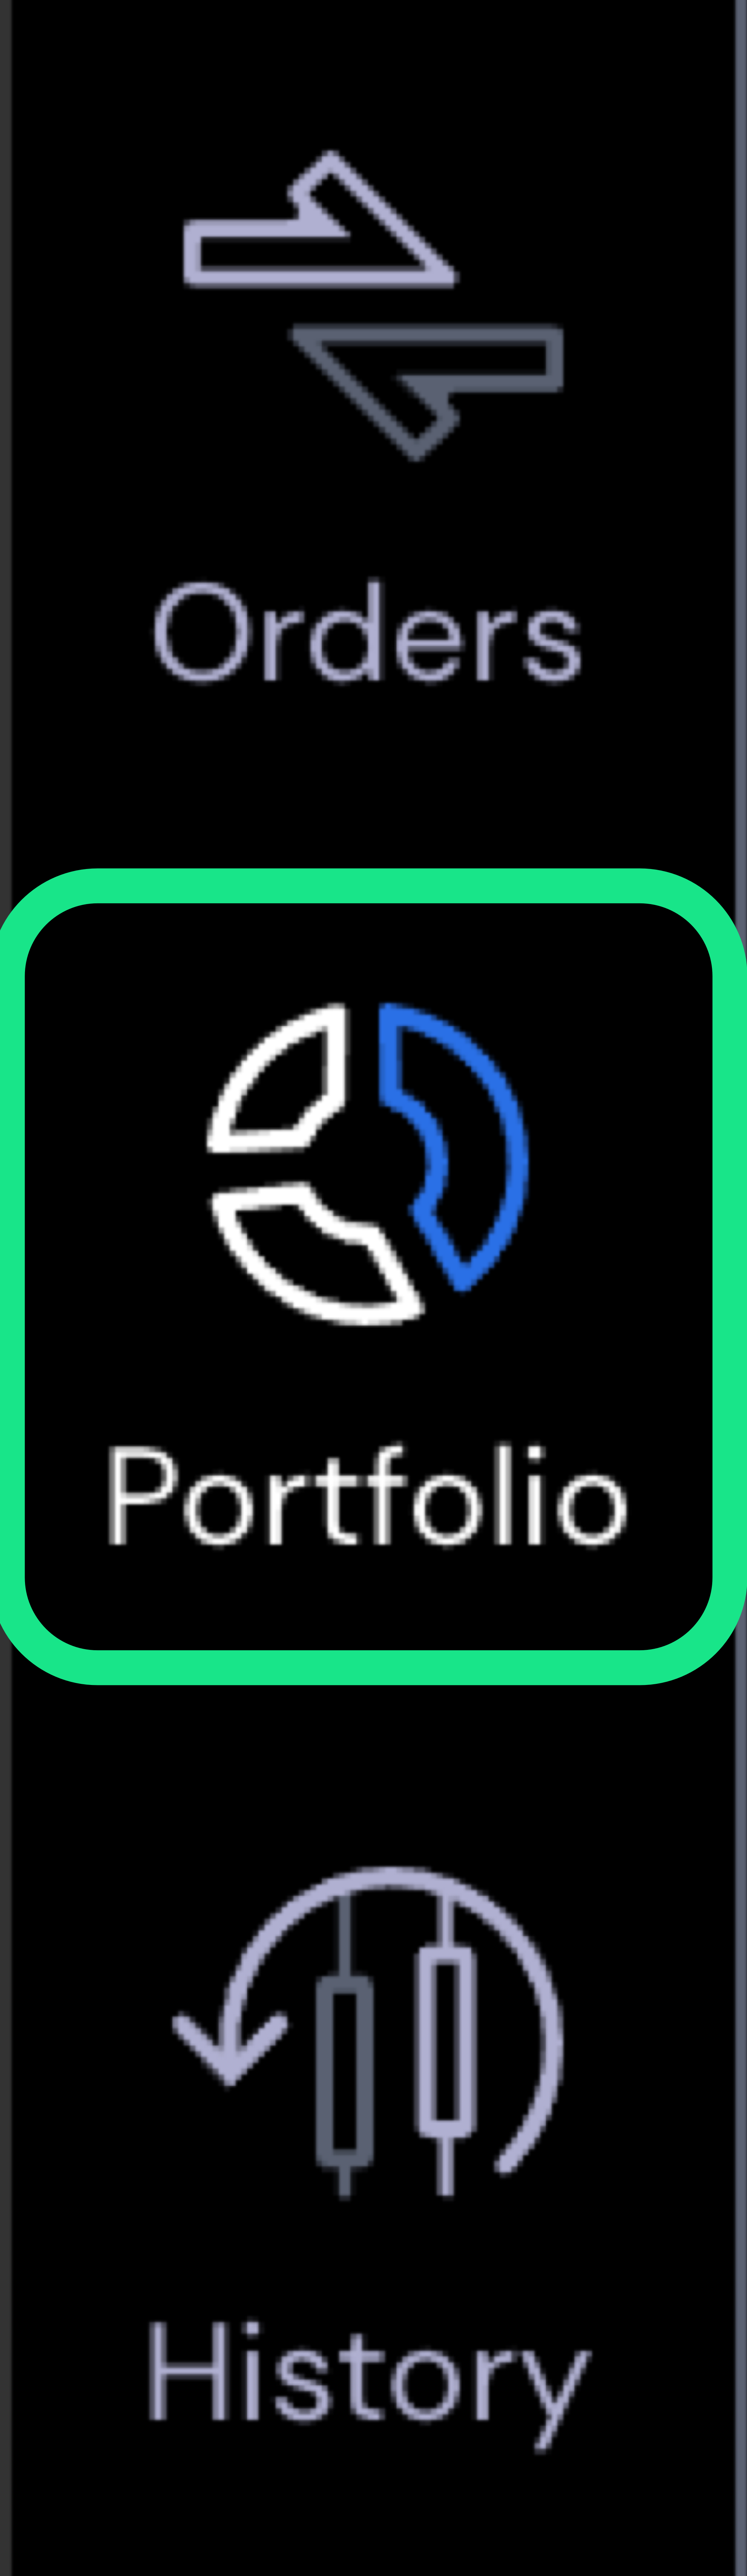 Portfolio icon on left-hand navigation